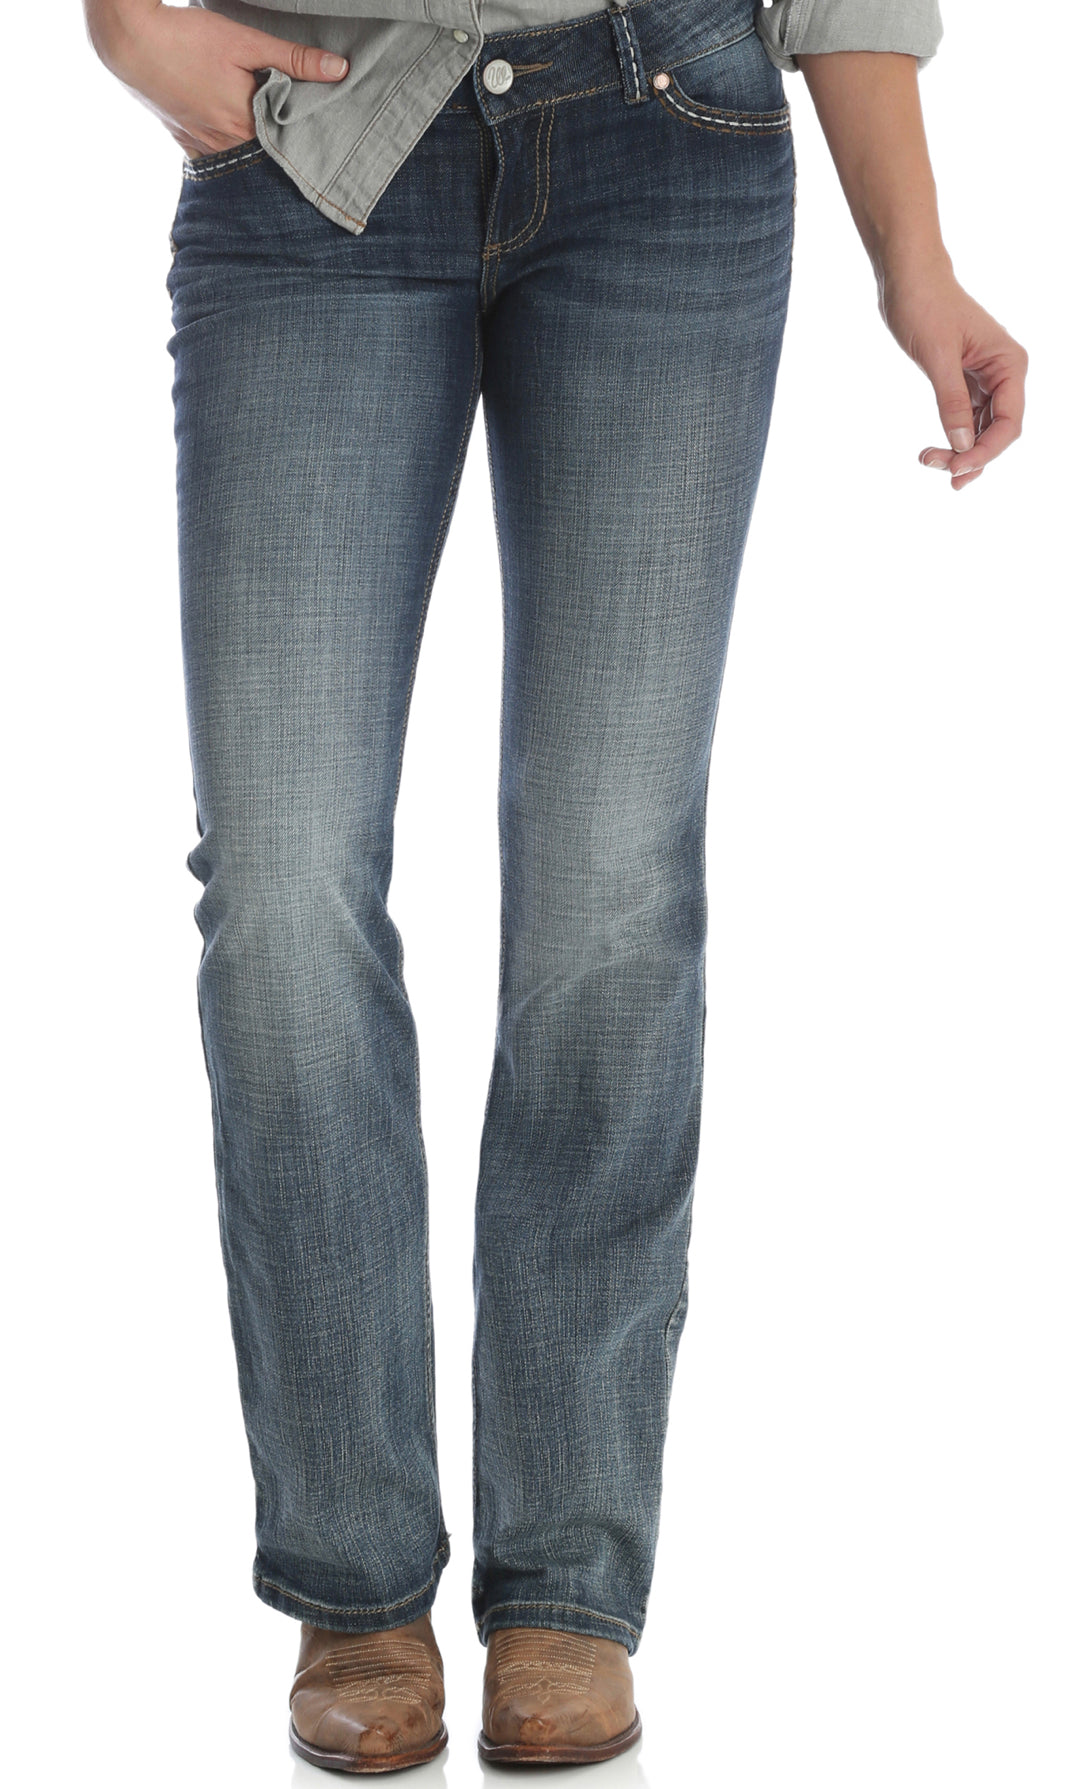 Wrangler Retro Sadie Low Rise Jeans